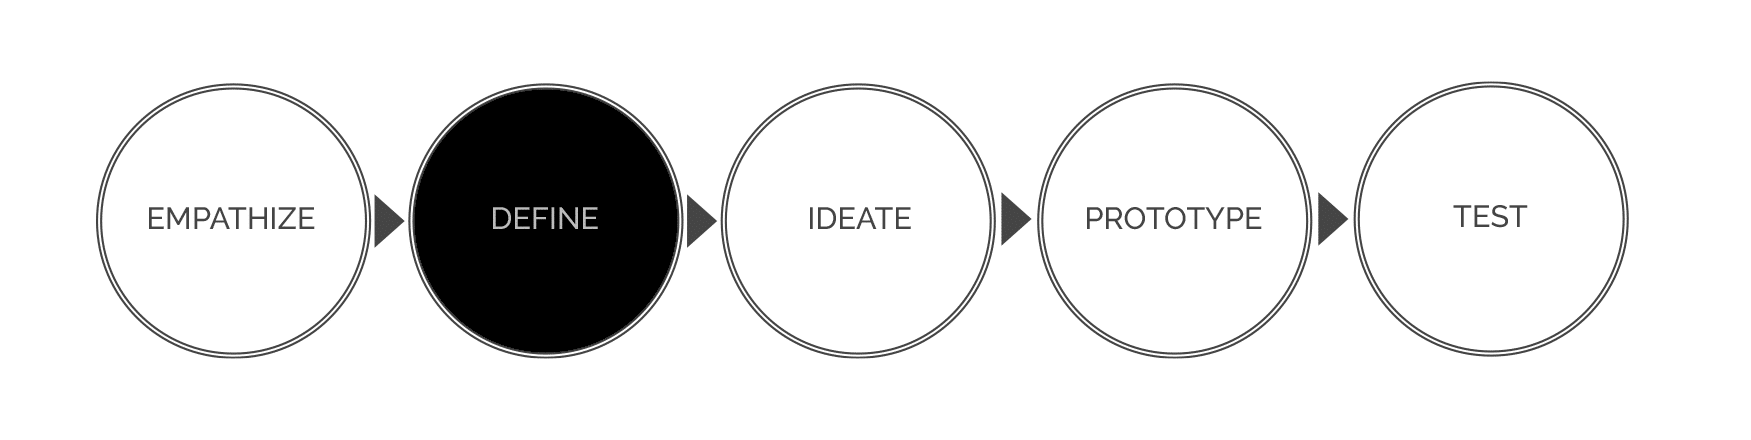 Stappen Design Thinking methode Empathize, DEFINE, Ideate, Prototype, Test